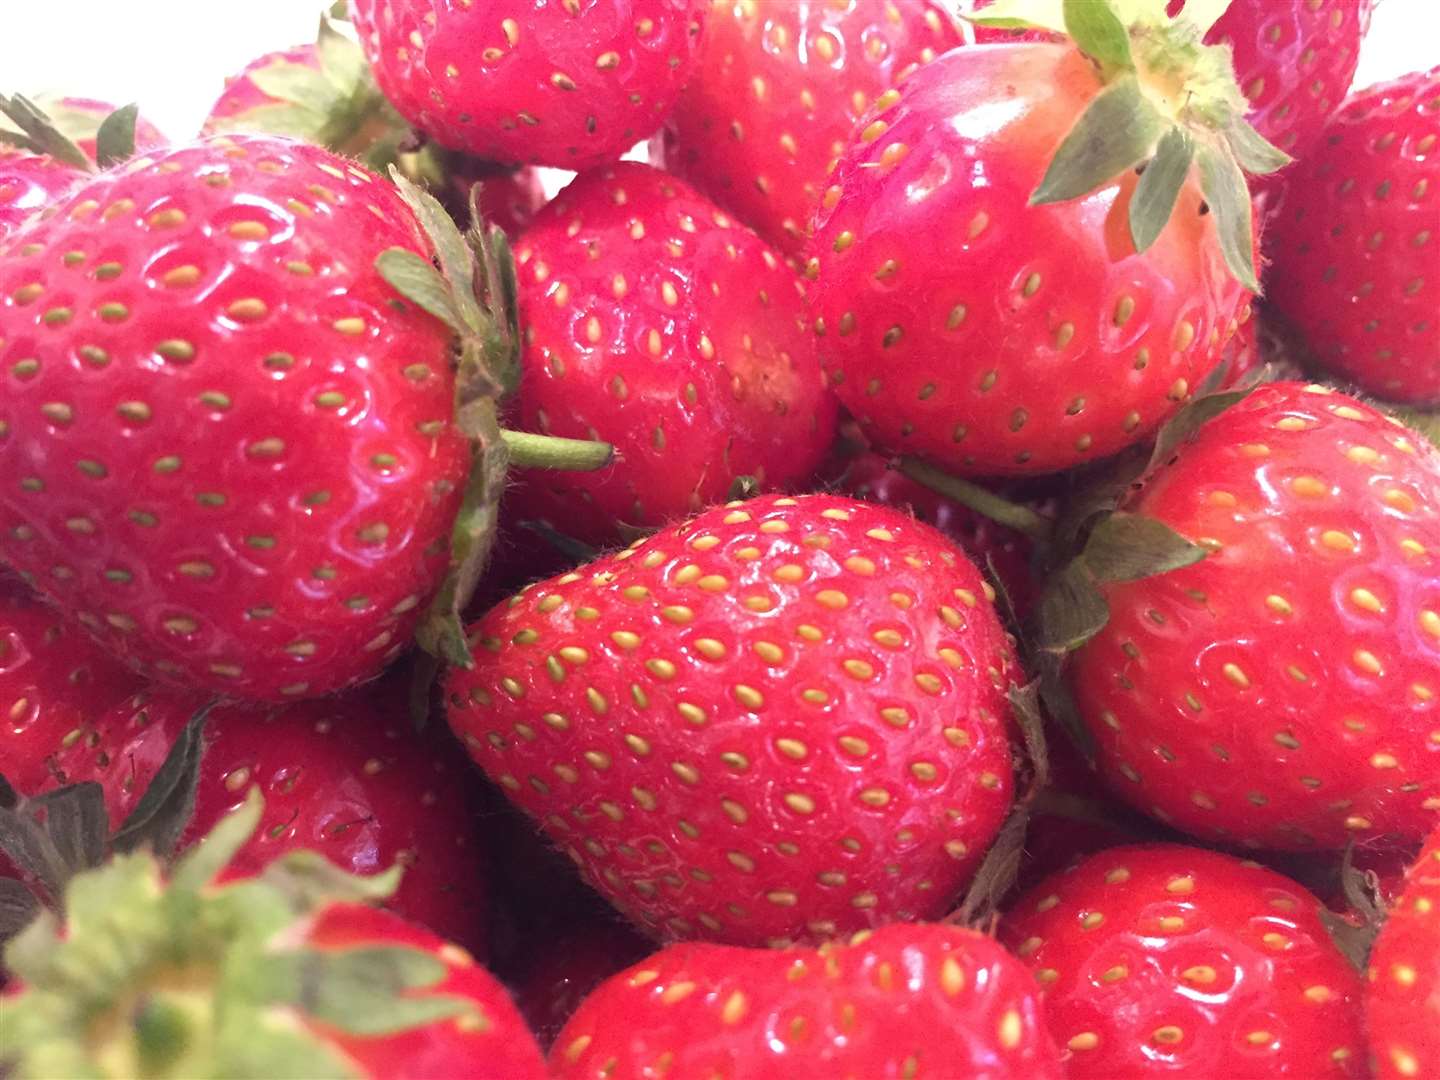 Strawberries from Aylesford Farmers' Market, grown in Sittingbourne - £2